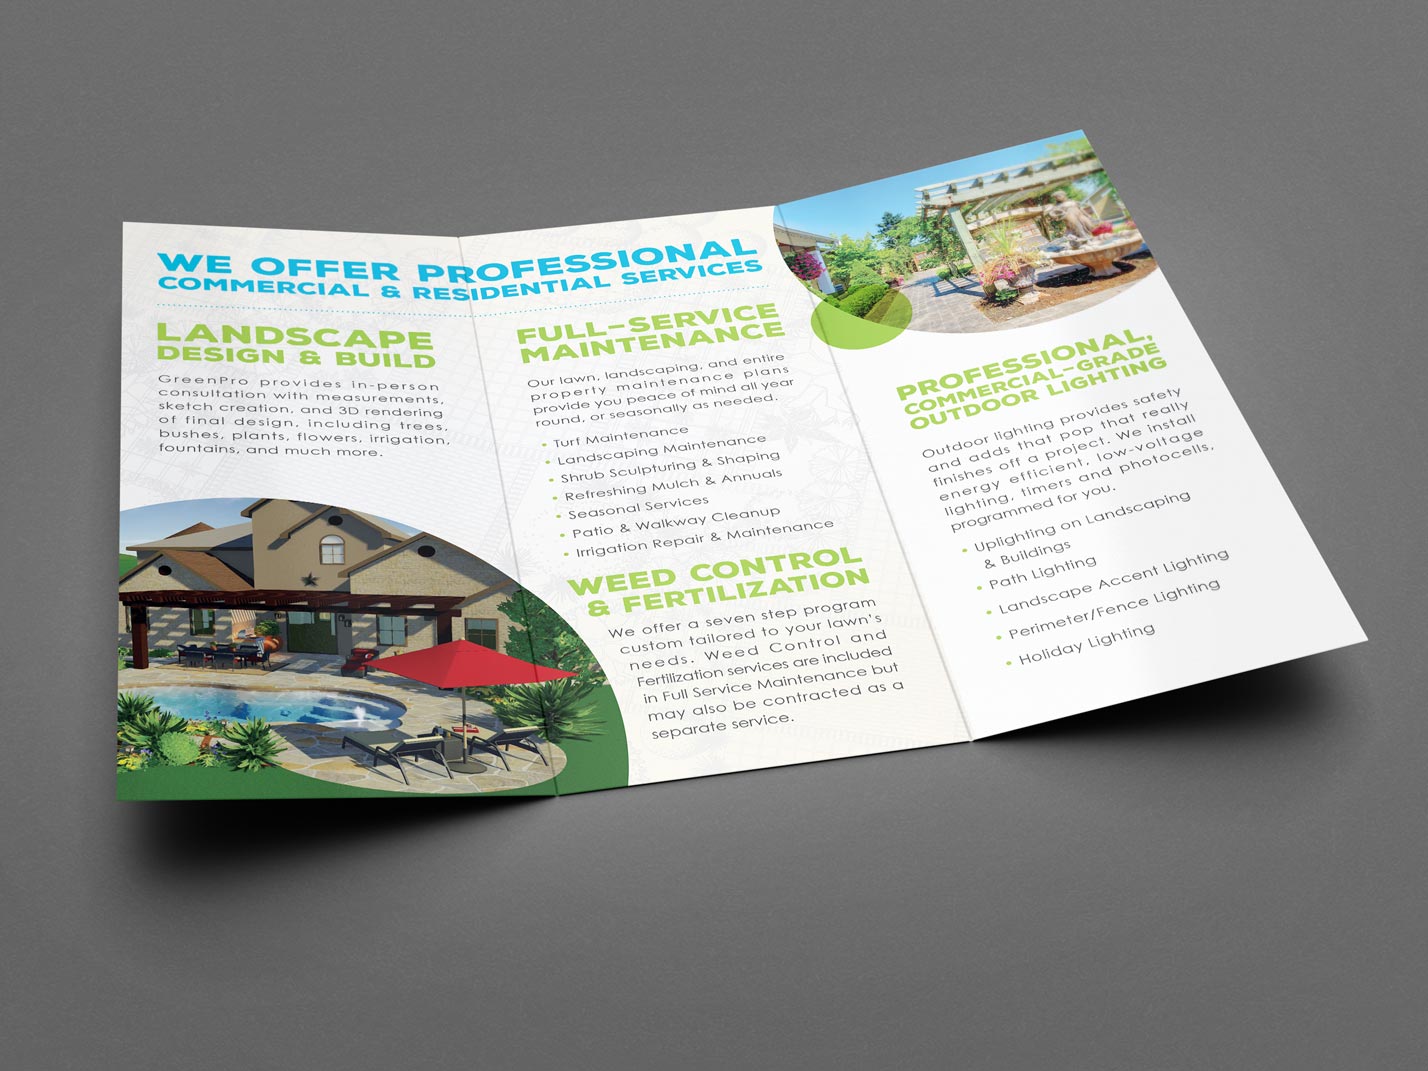 GreenPro Outdoor Services Brochure